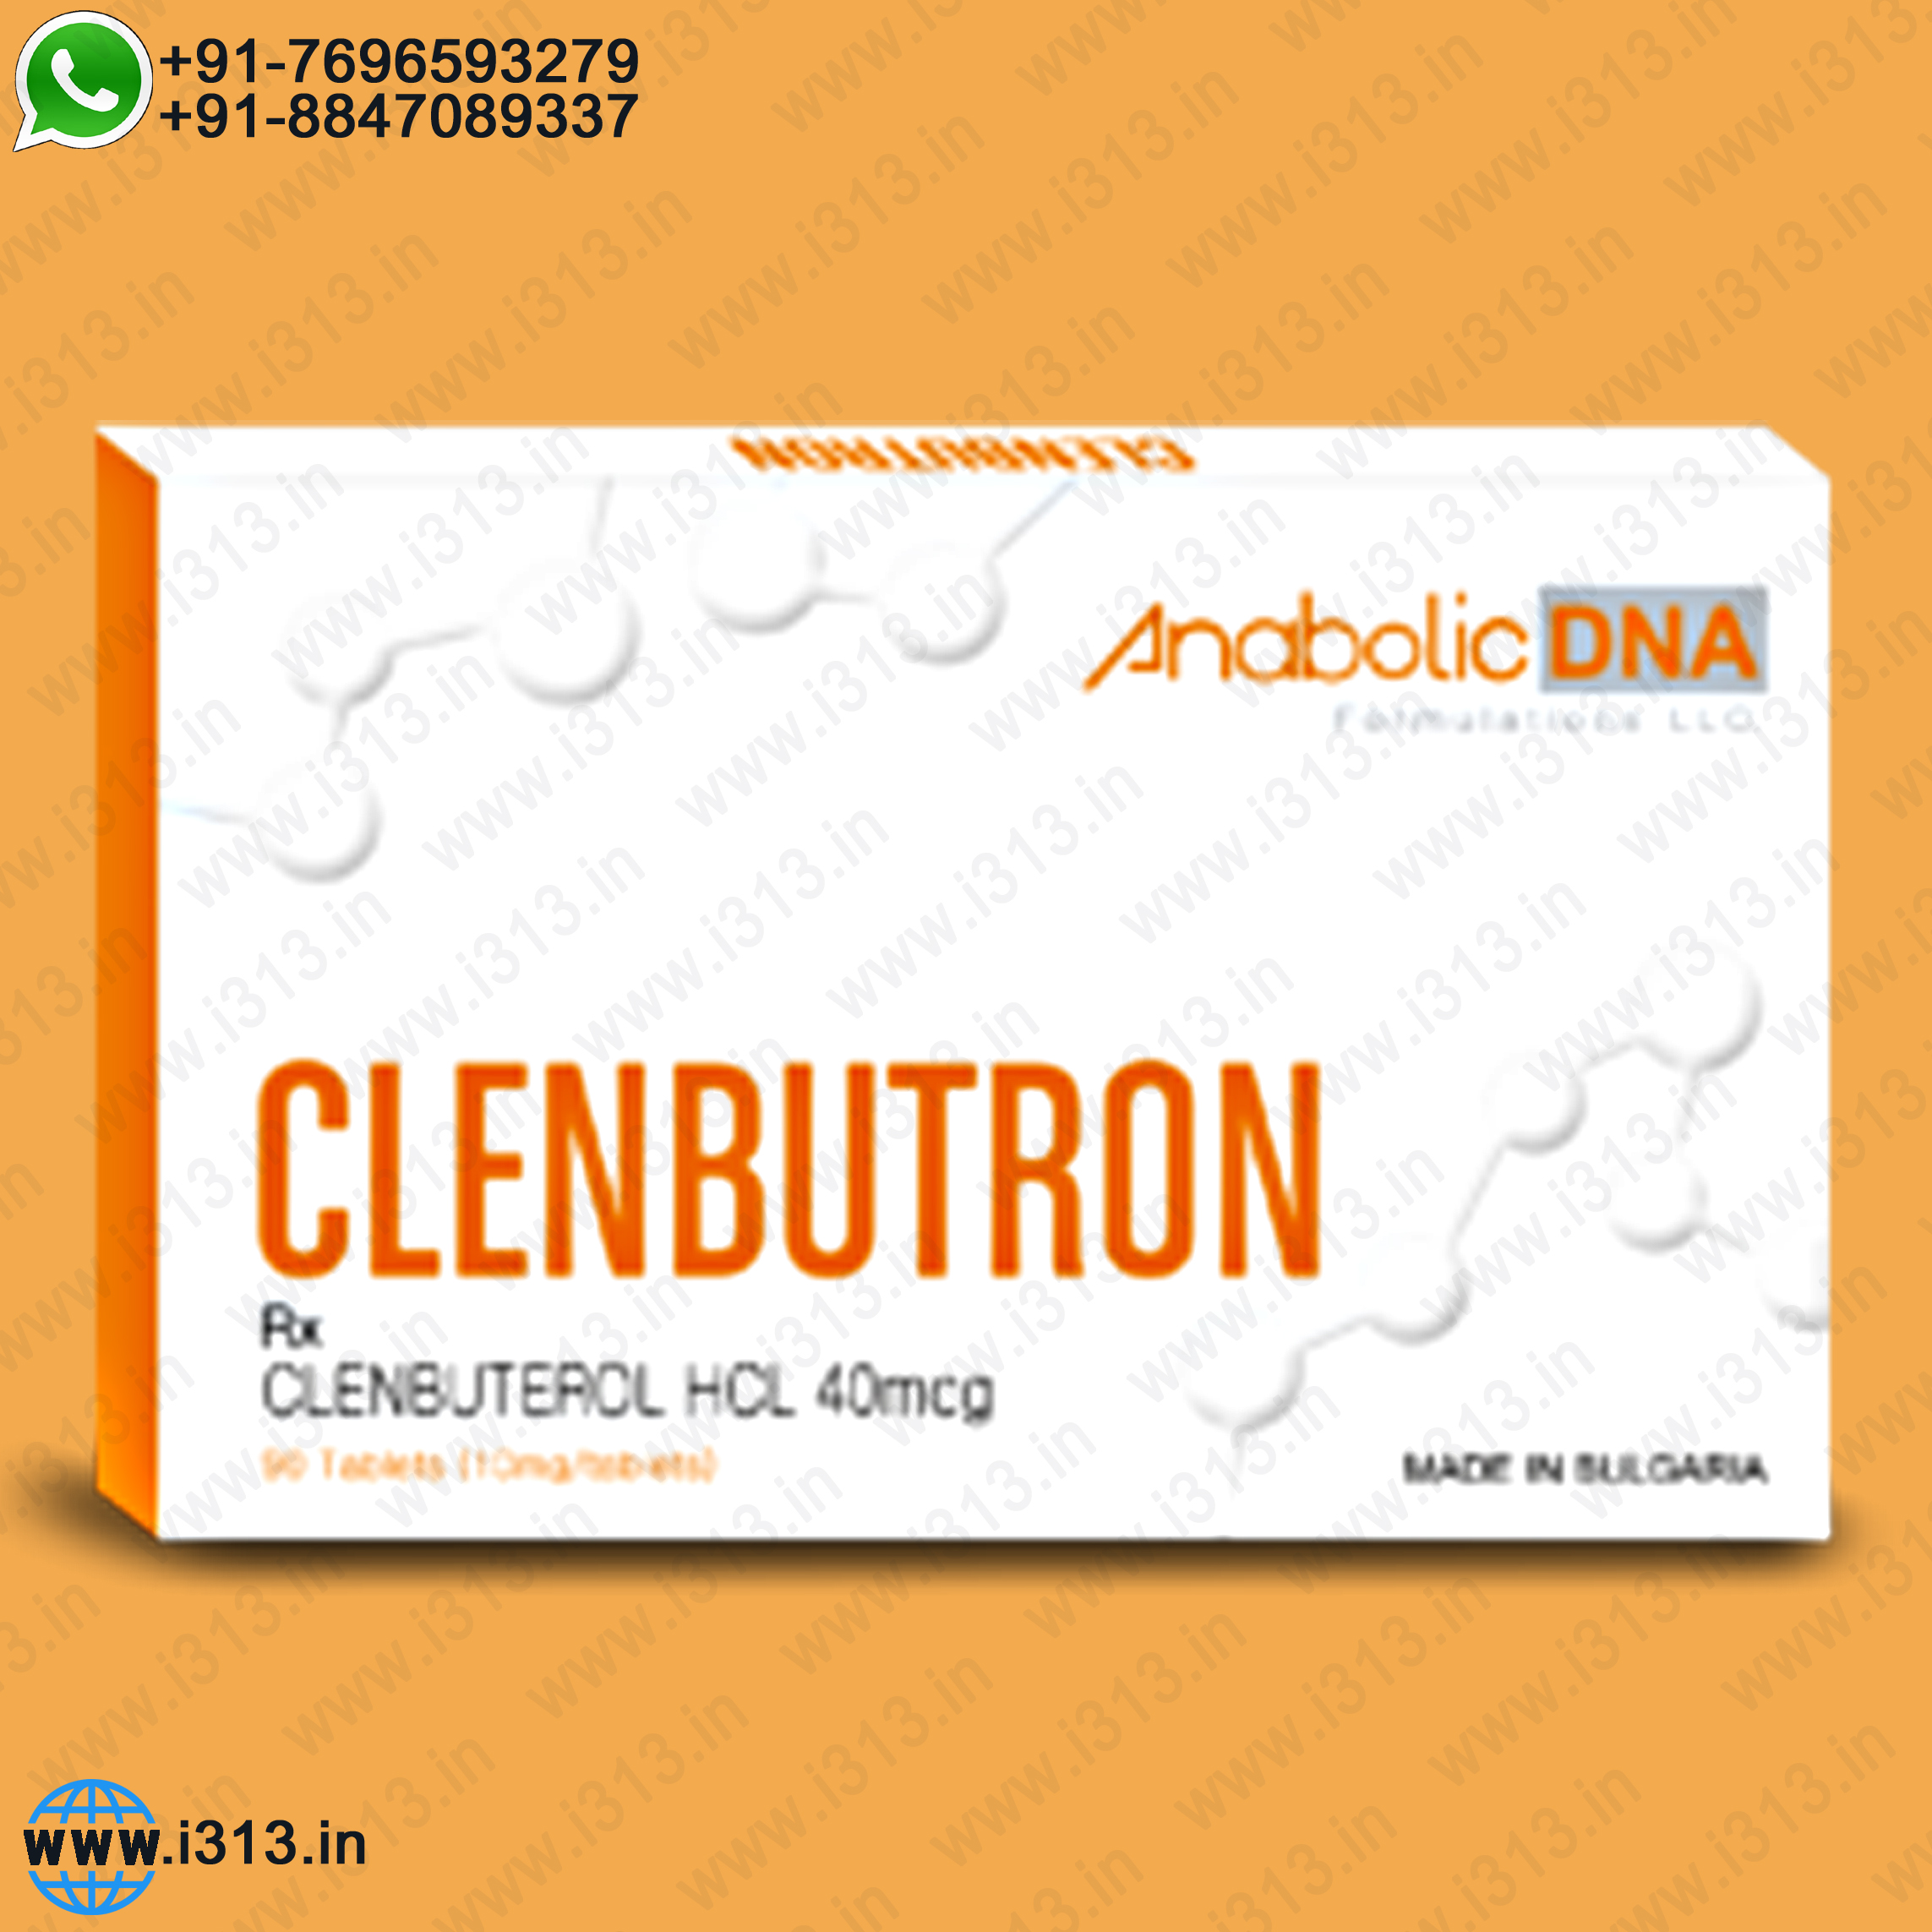 Anabolic DNA Clenbutron